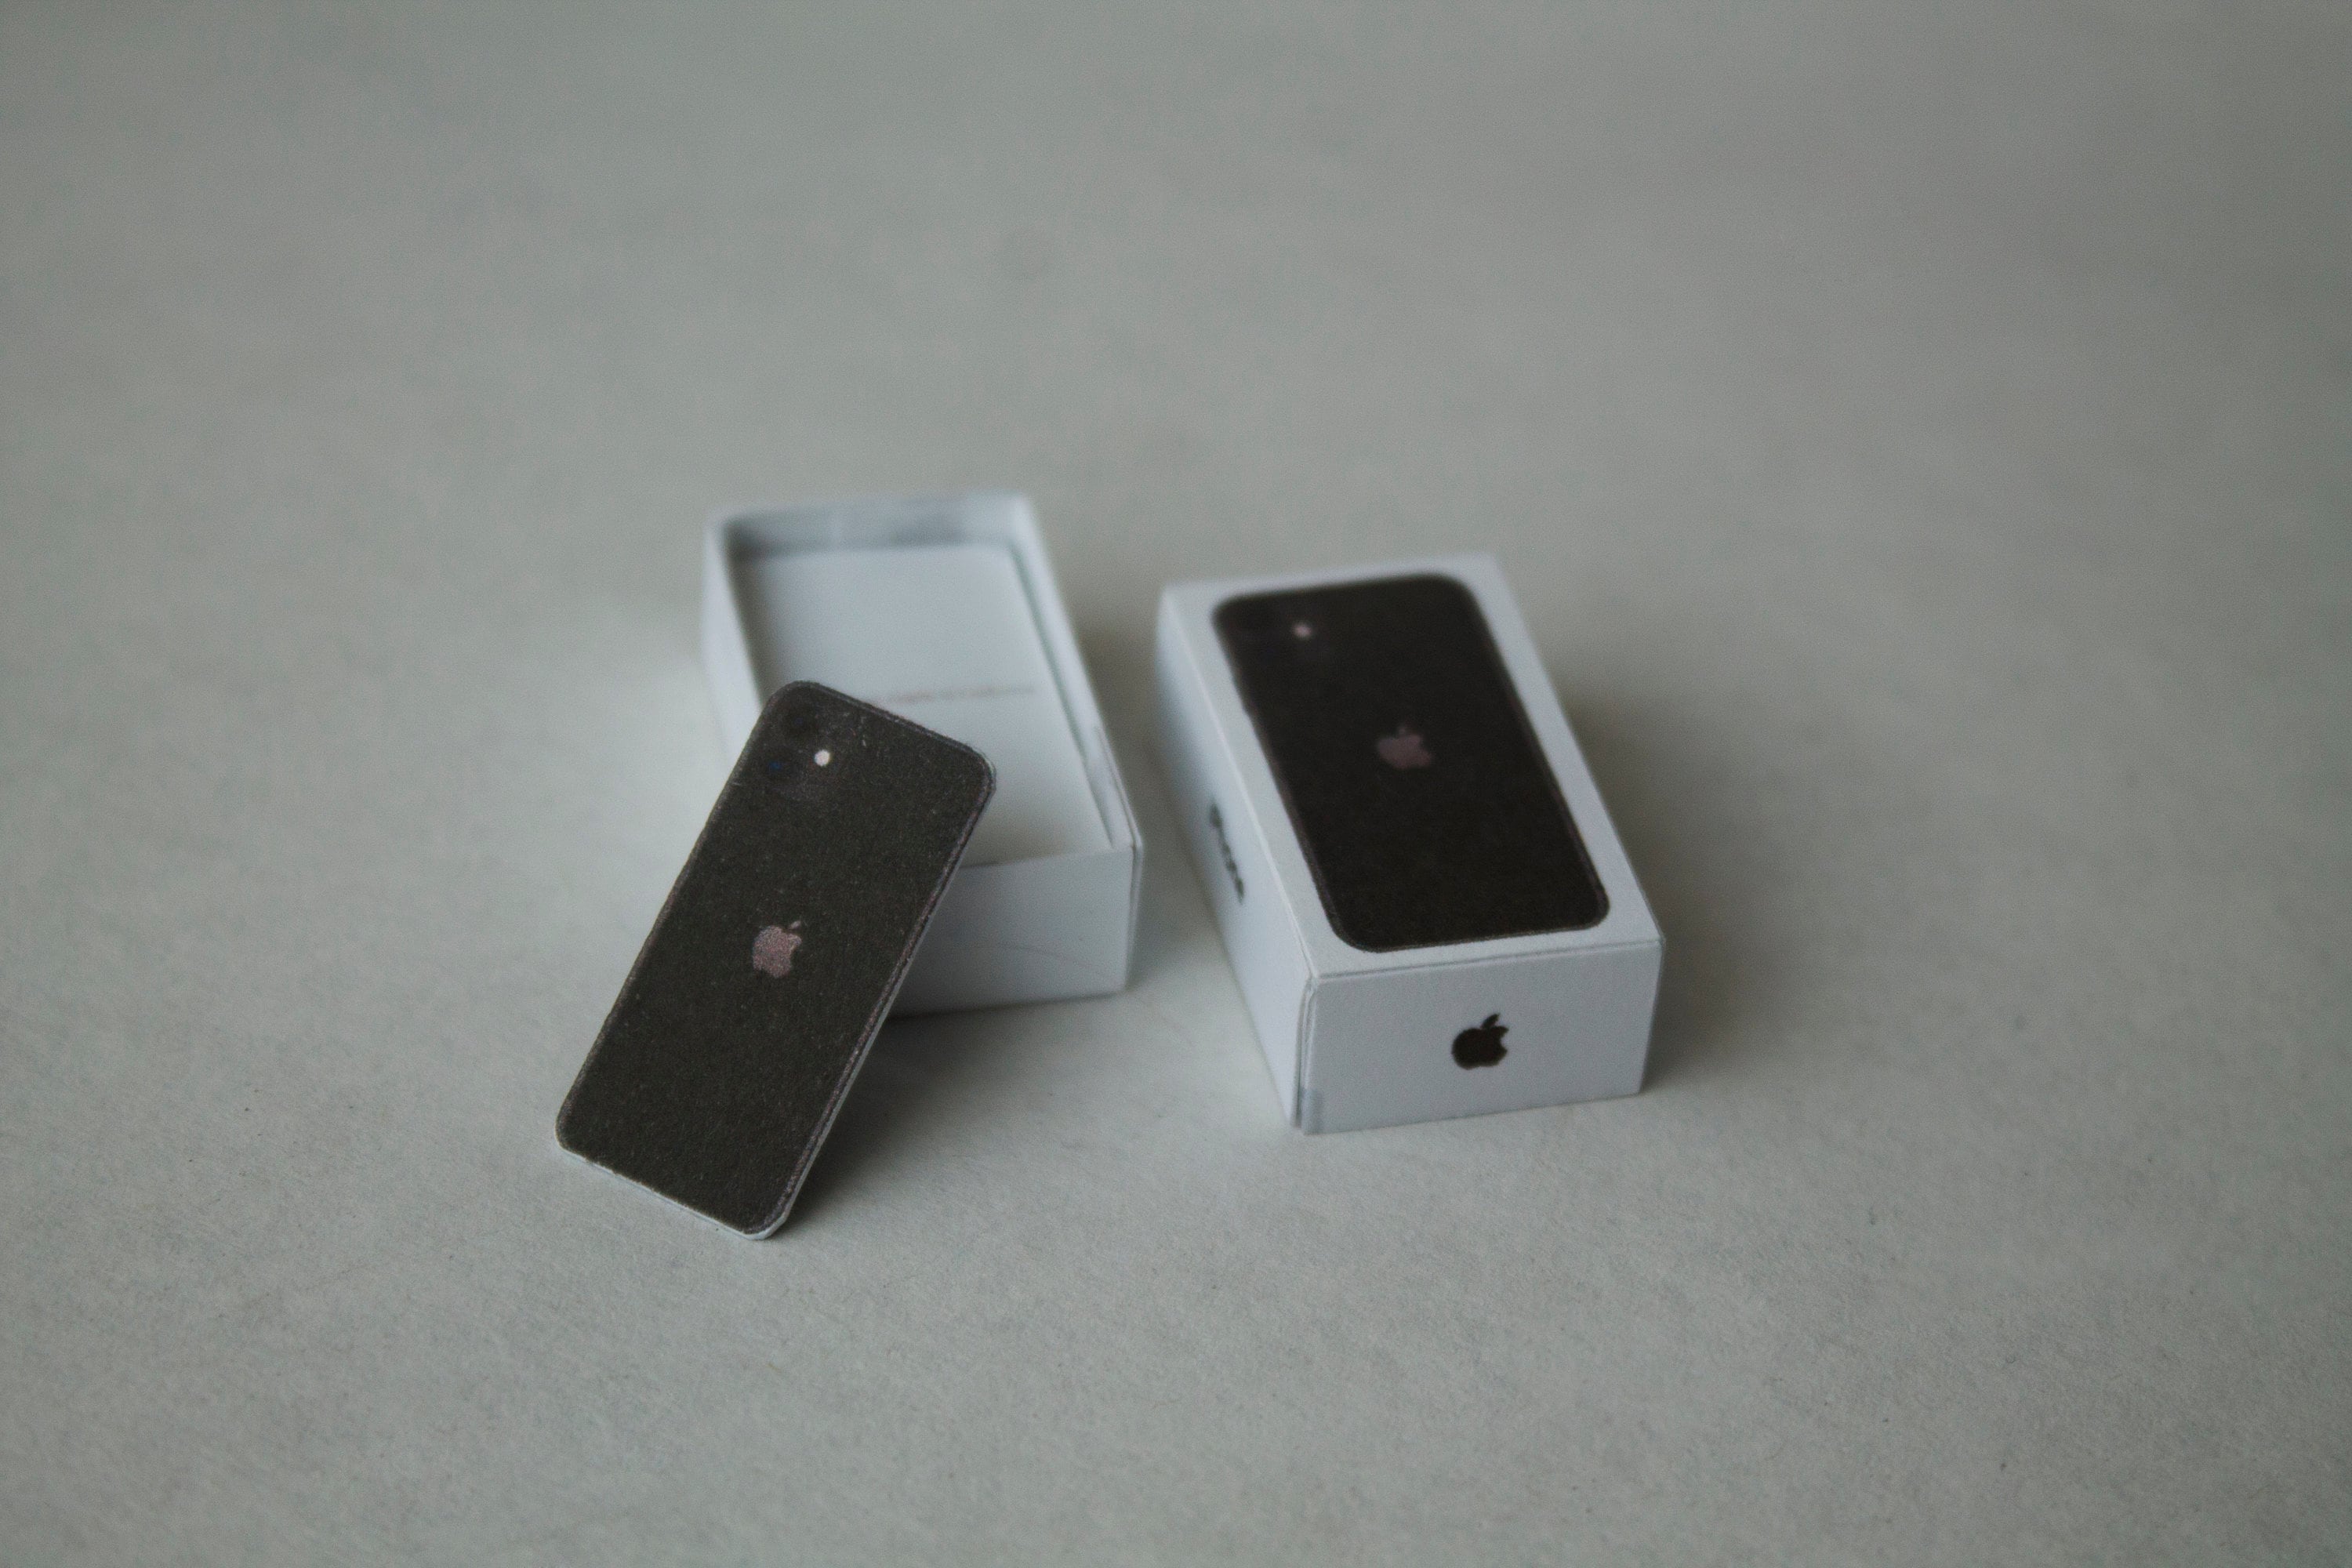 Mini iPhone 11 Black Template 